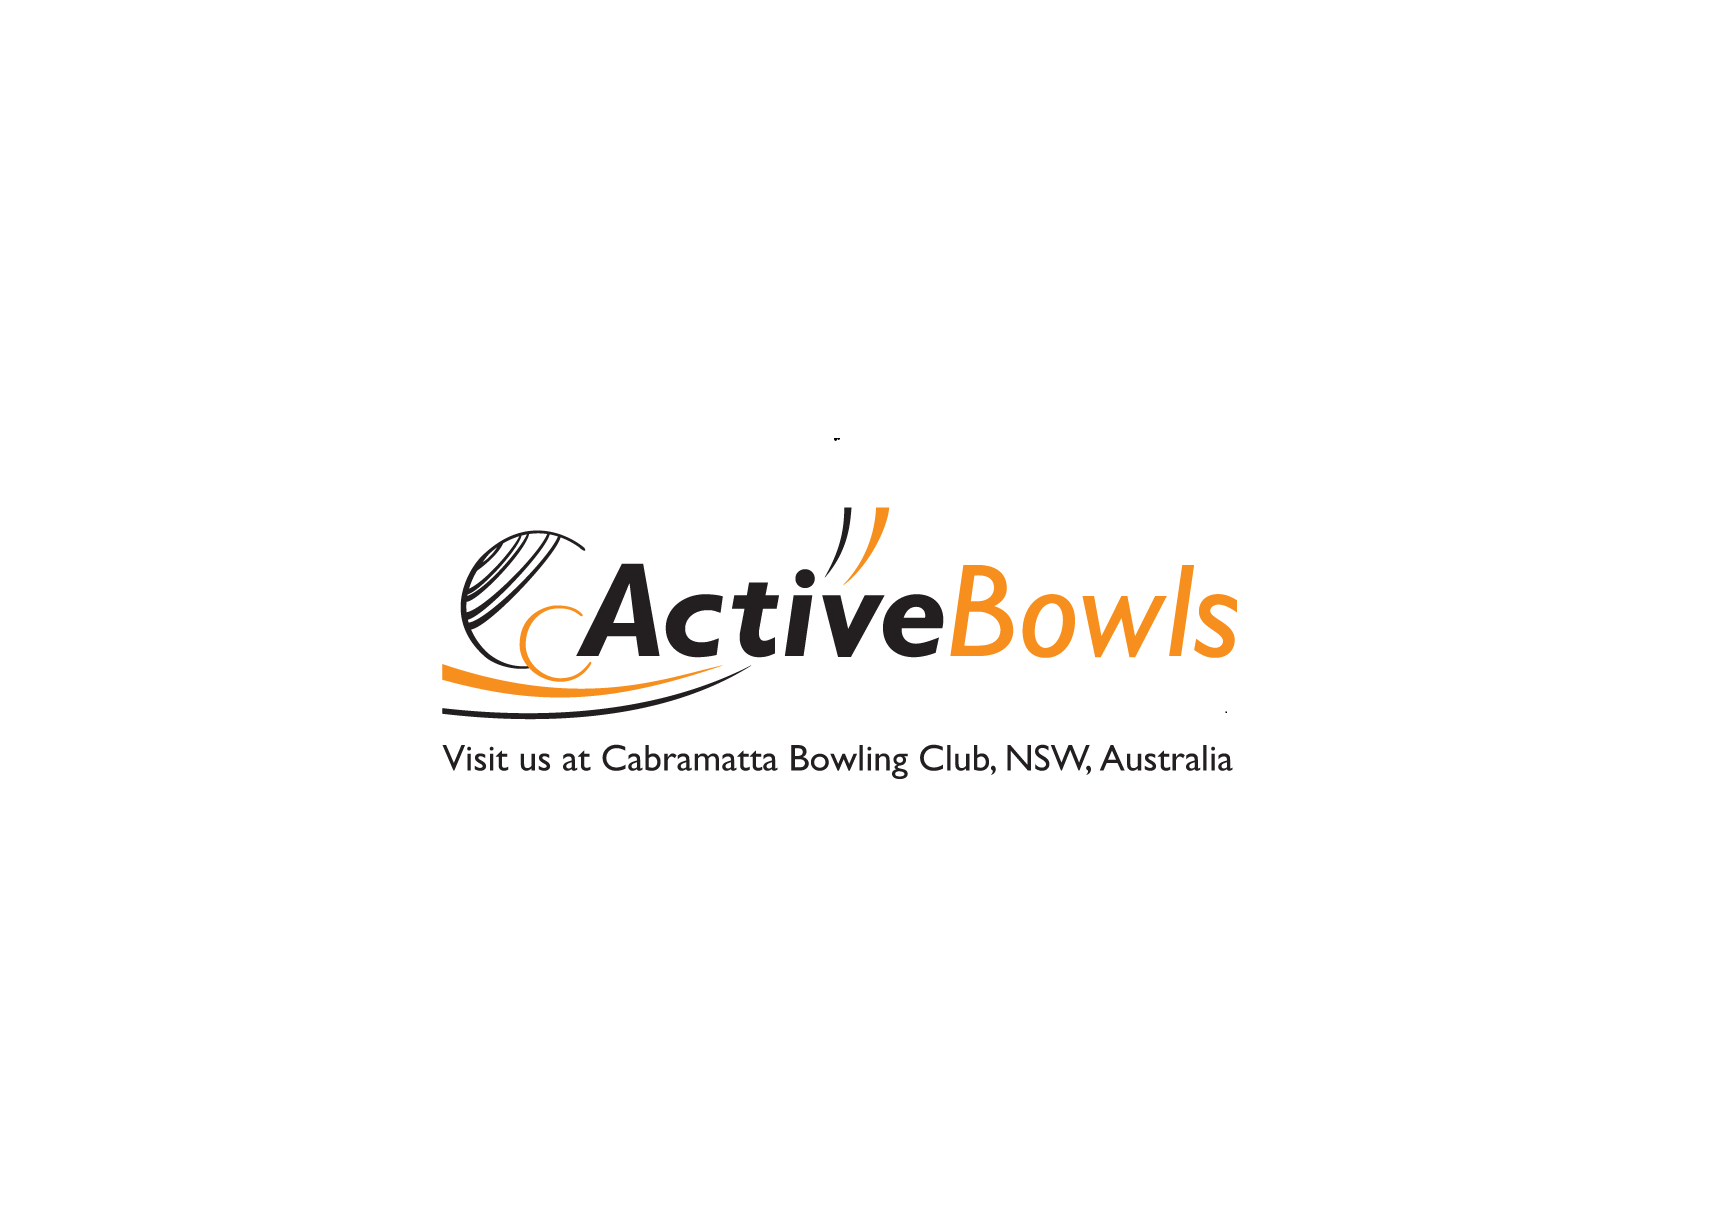 Activebowls Sydney NSW